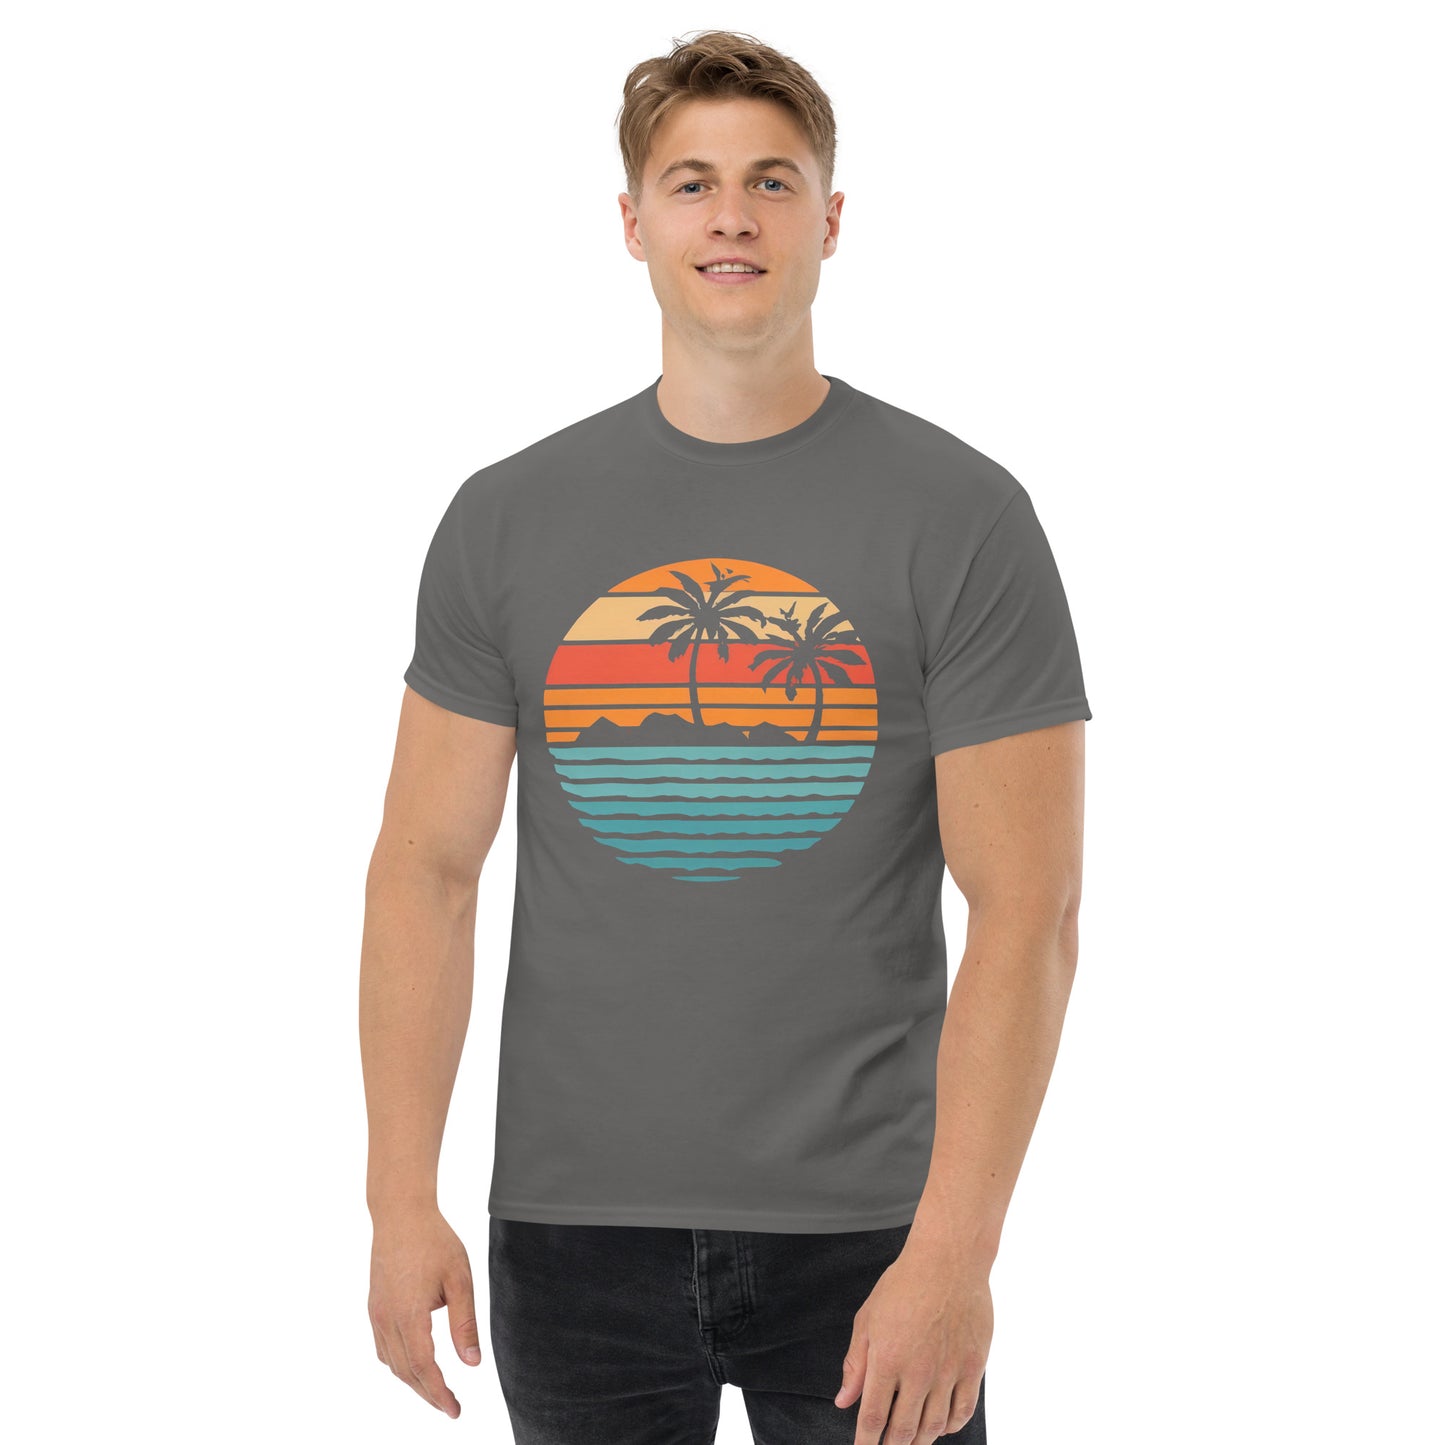 "Retro Island" T-shirt